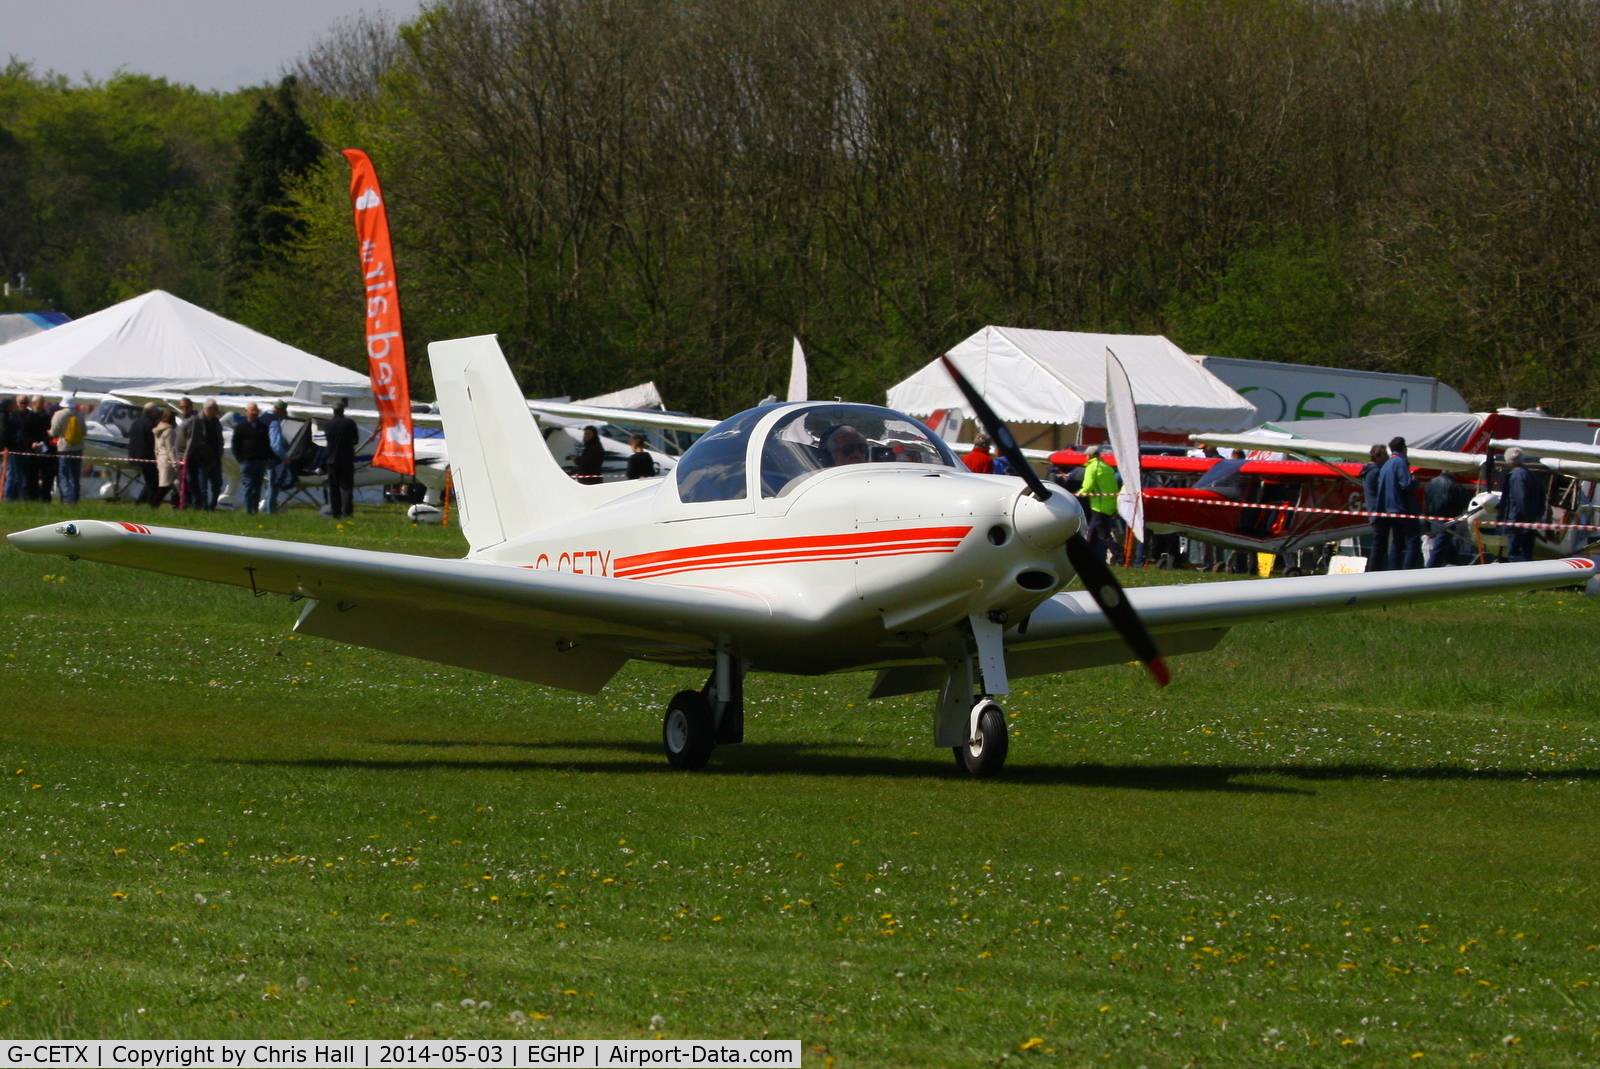 G-CETX, 2007 Alpi Aviation Pioneer 300 C/N PFA 330-14573, at the 2014 Microlight Trade Fair, Popham